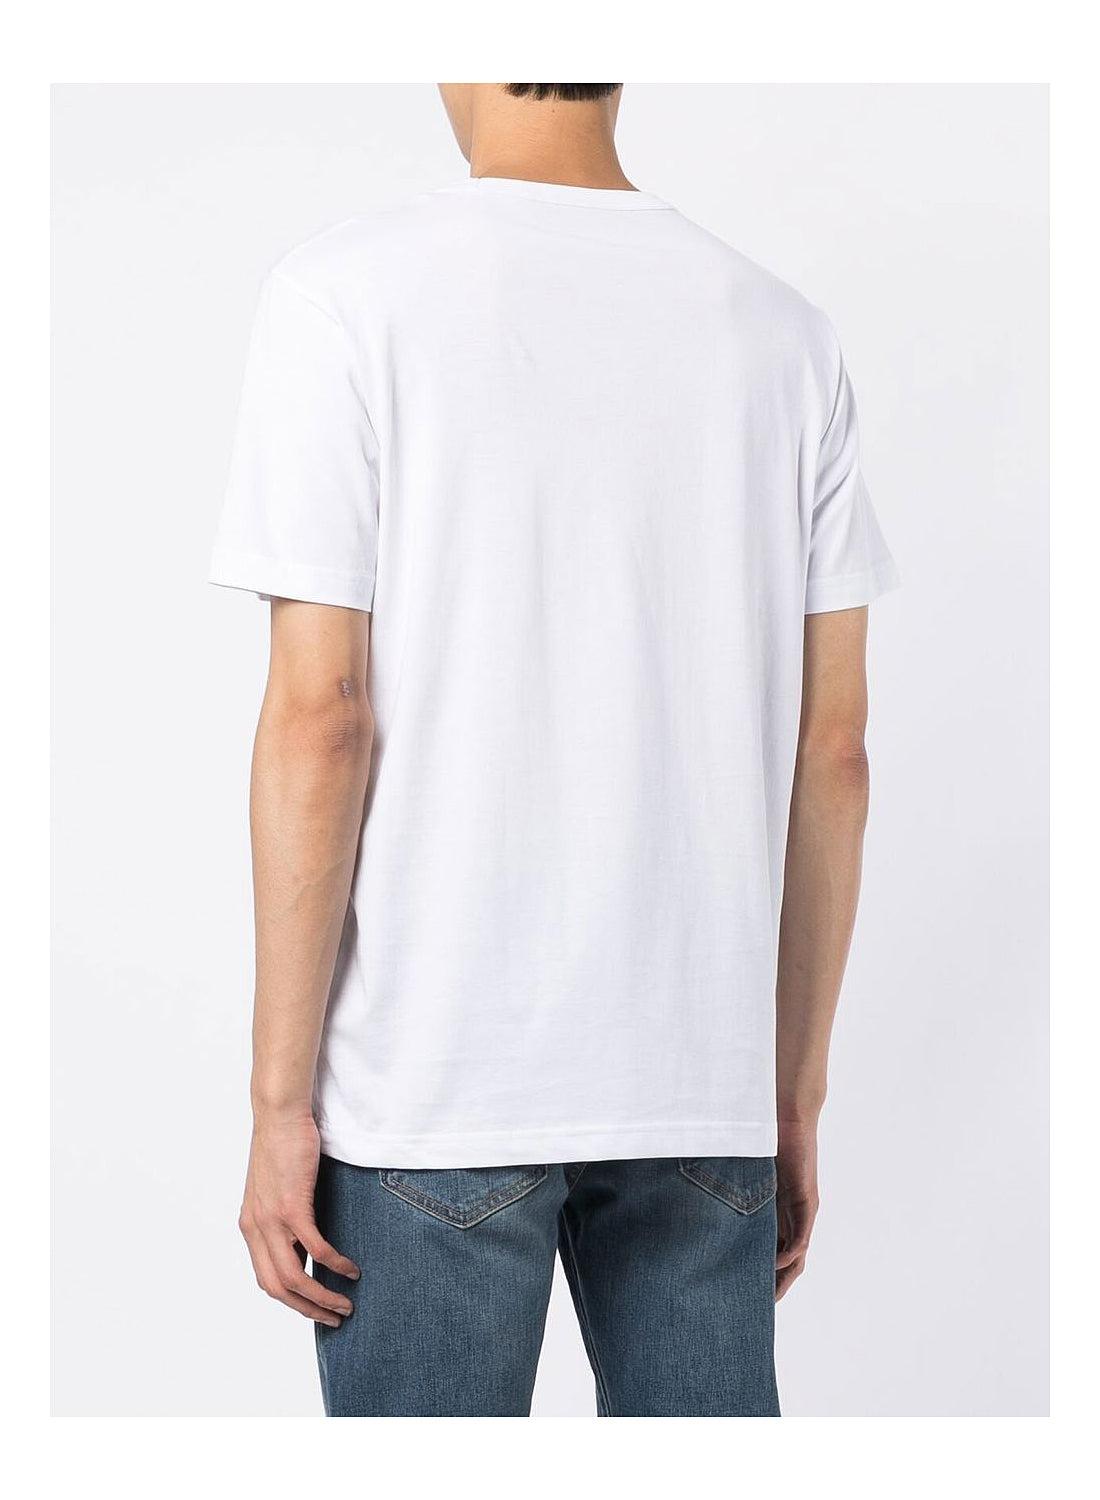 Belstaff Cotton 1924 T-shirt in White for Men | Lyst